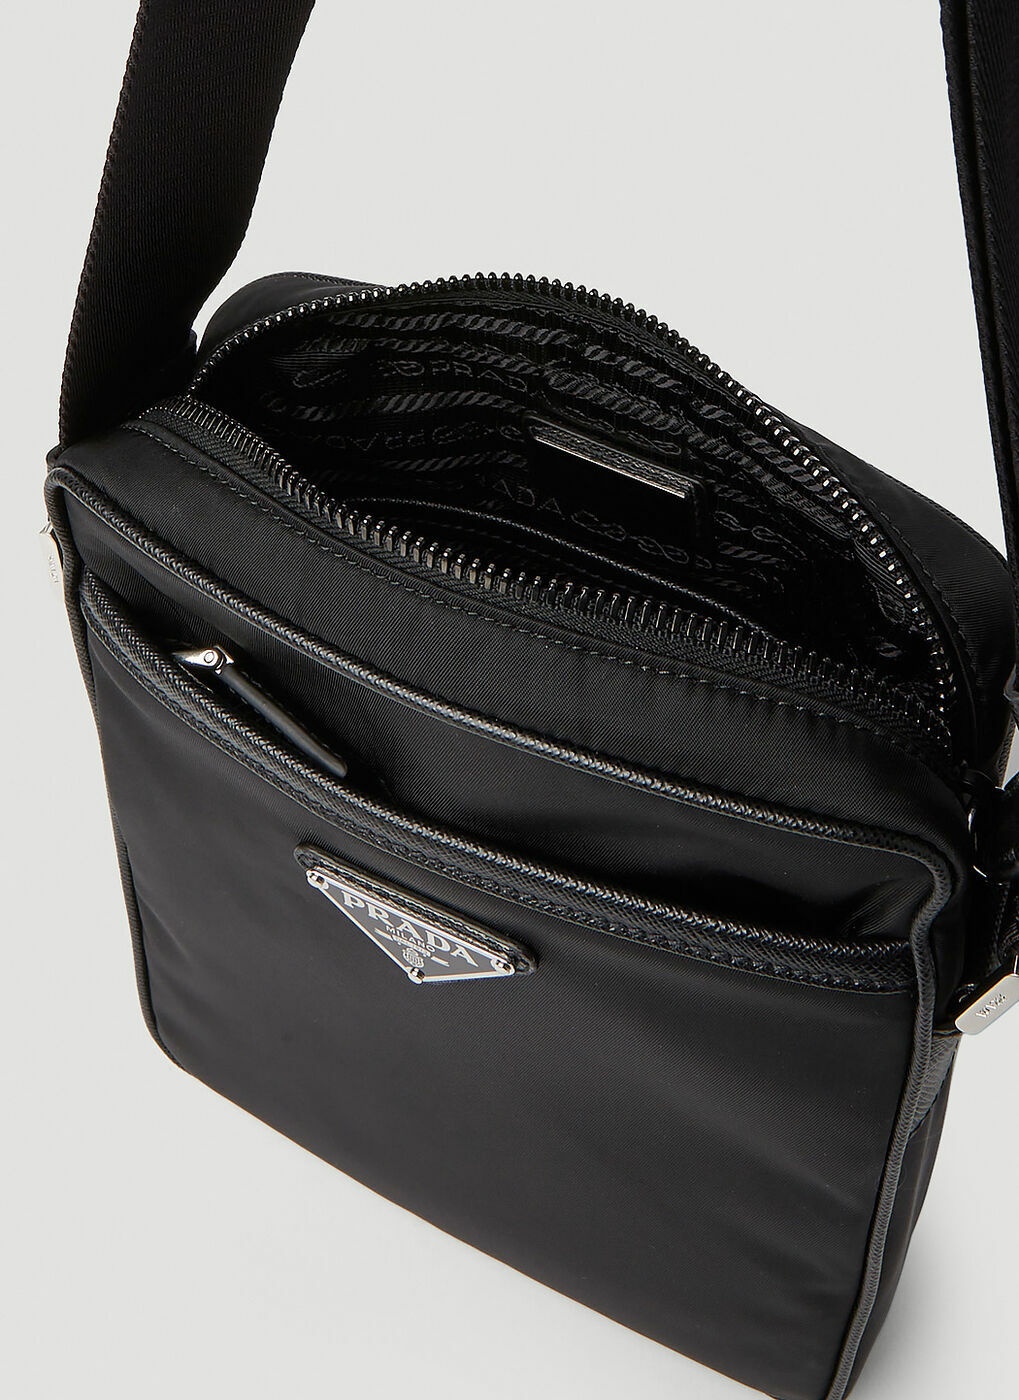 Prada Man Black Leather And Nylon Crossbody Bag 